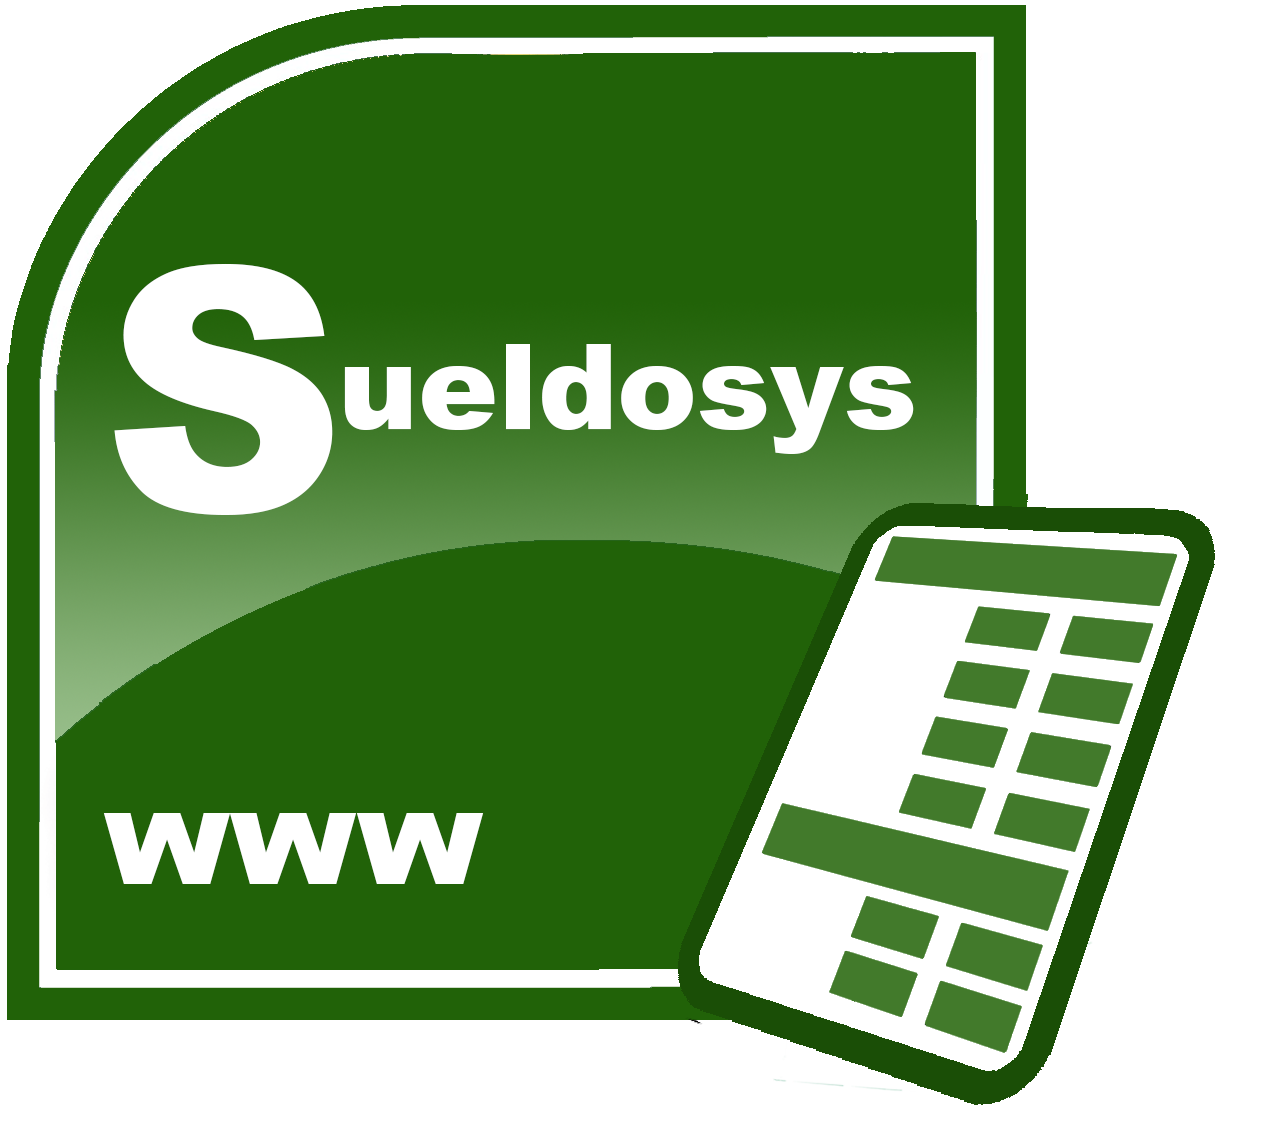 sueldosys_wwww.png - 240.84 kB